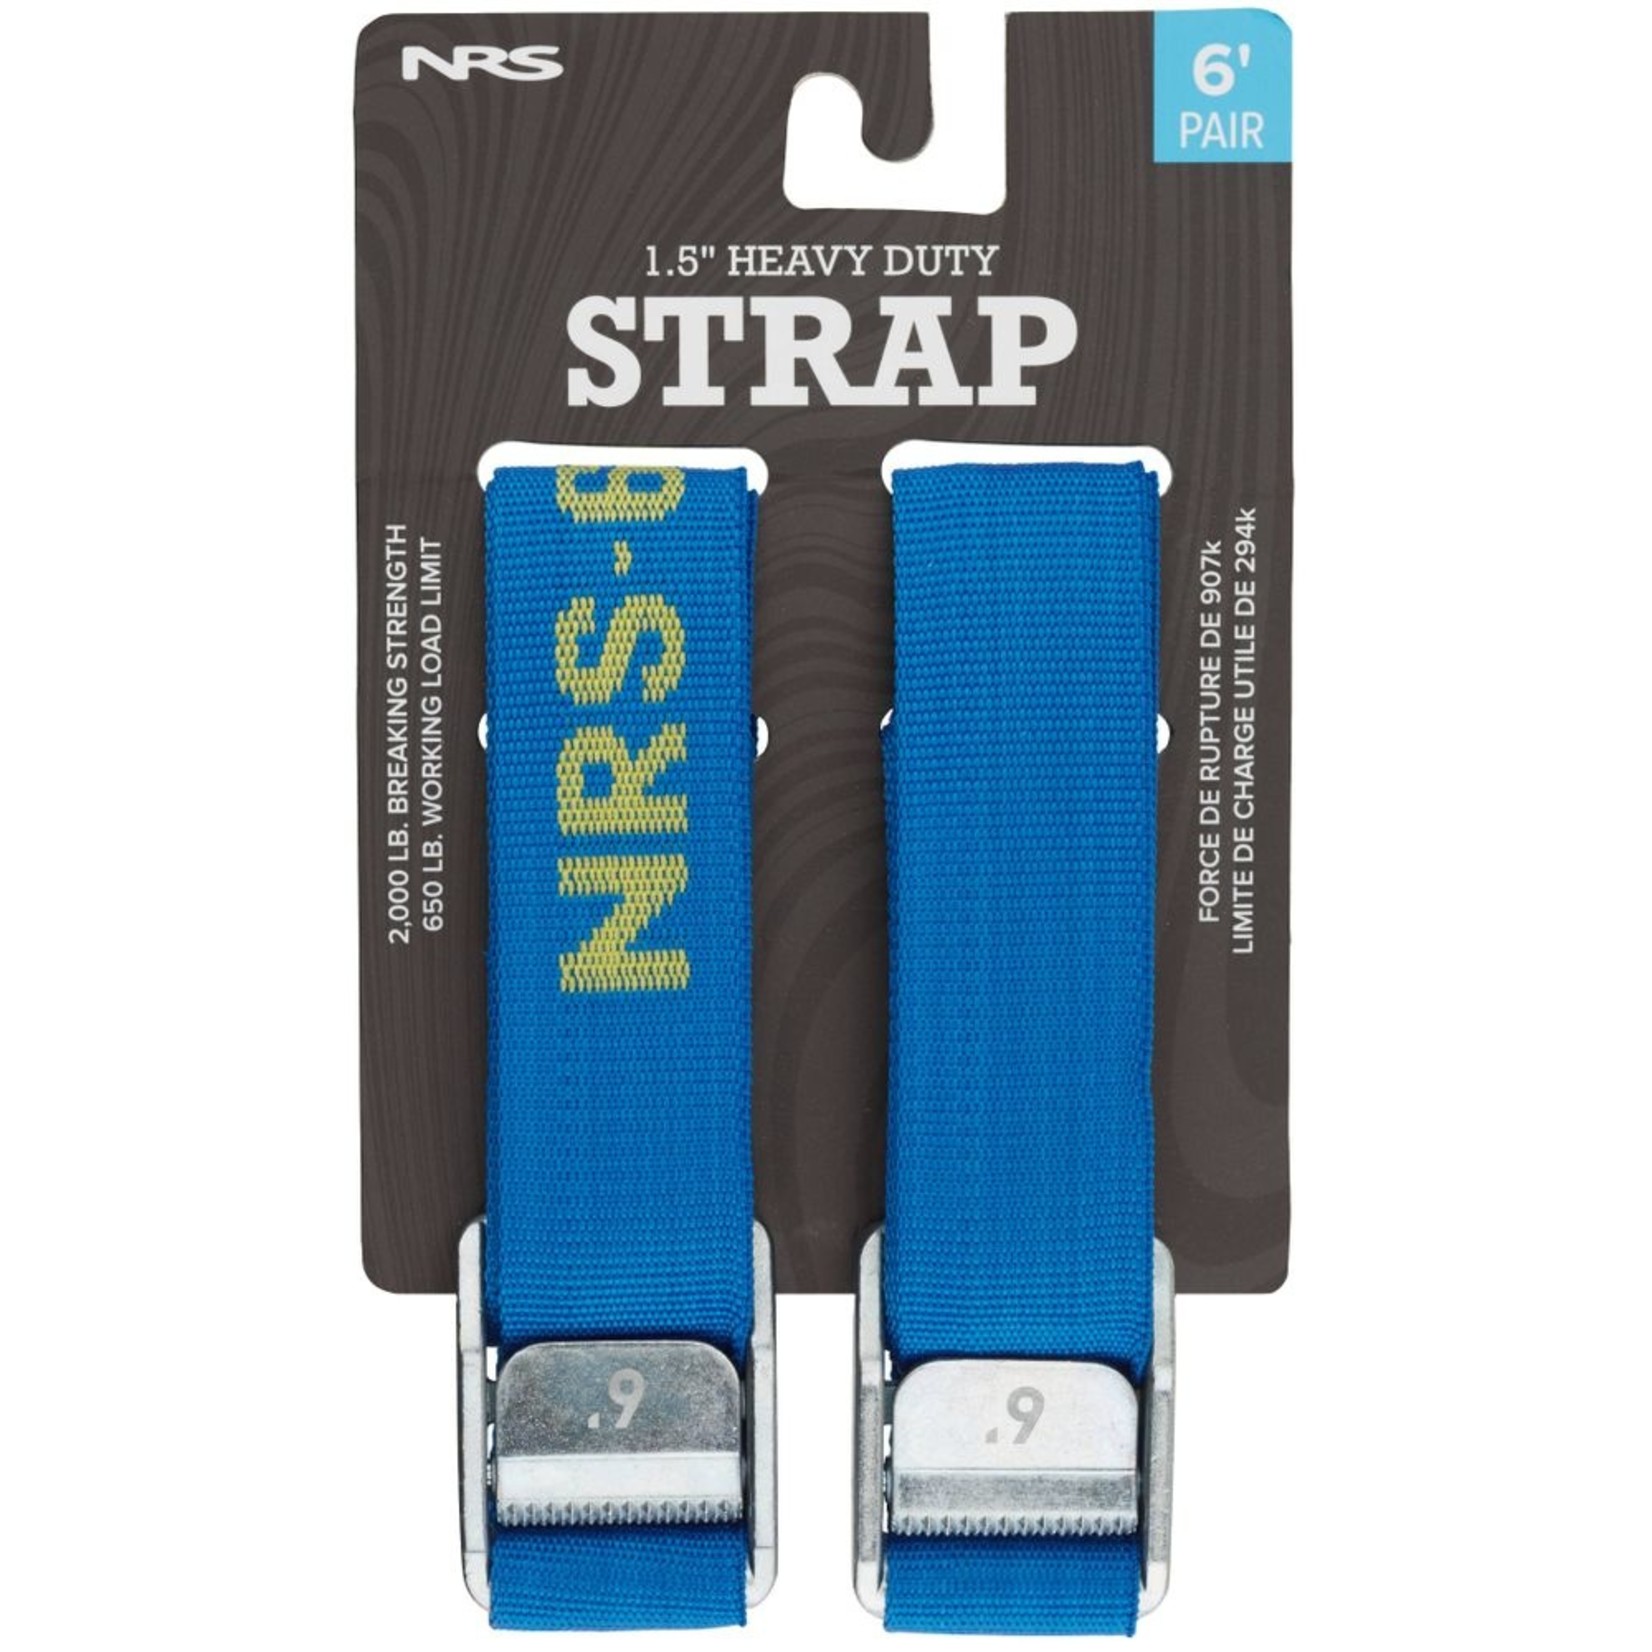 NRS, Inc NRS 1.5" Heavy Duty Straps